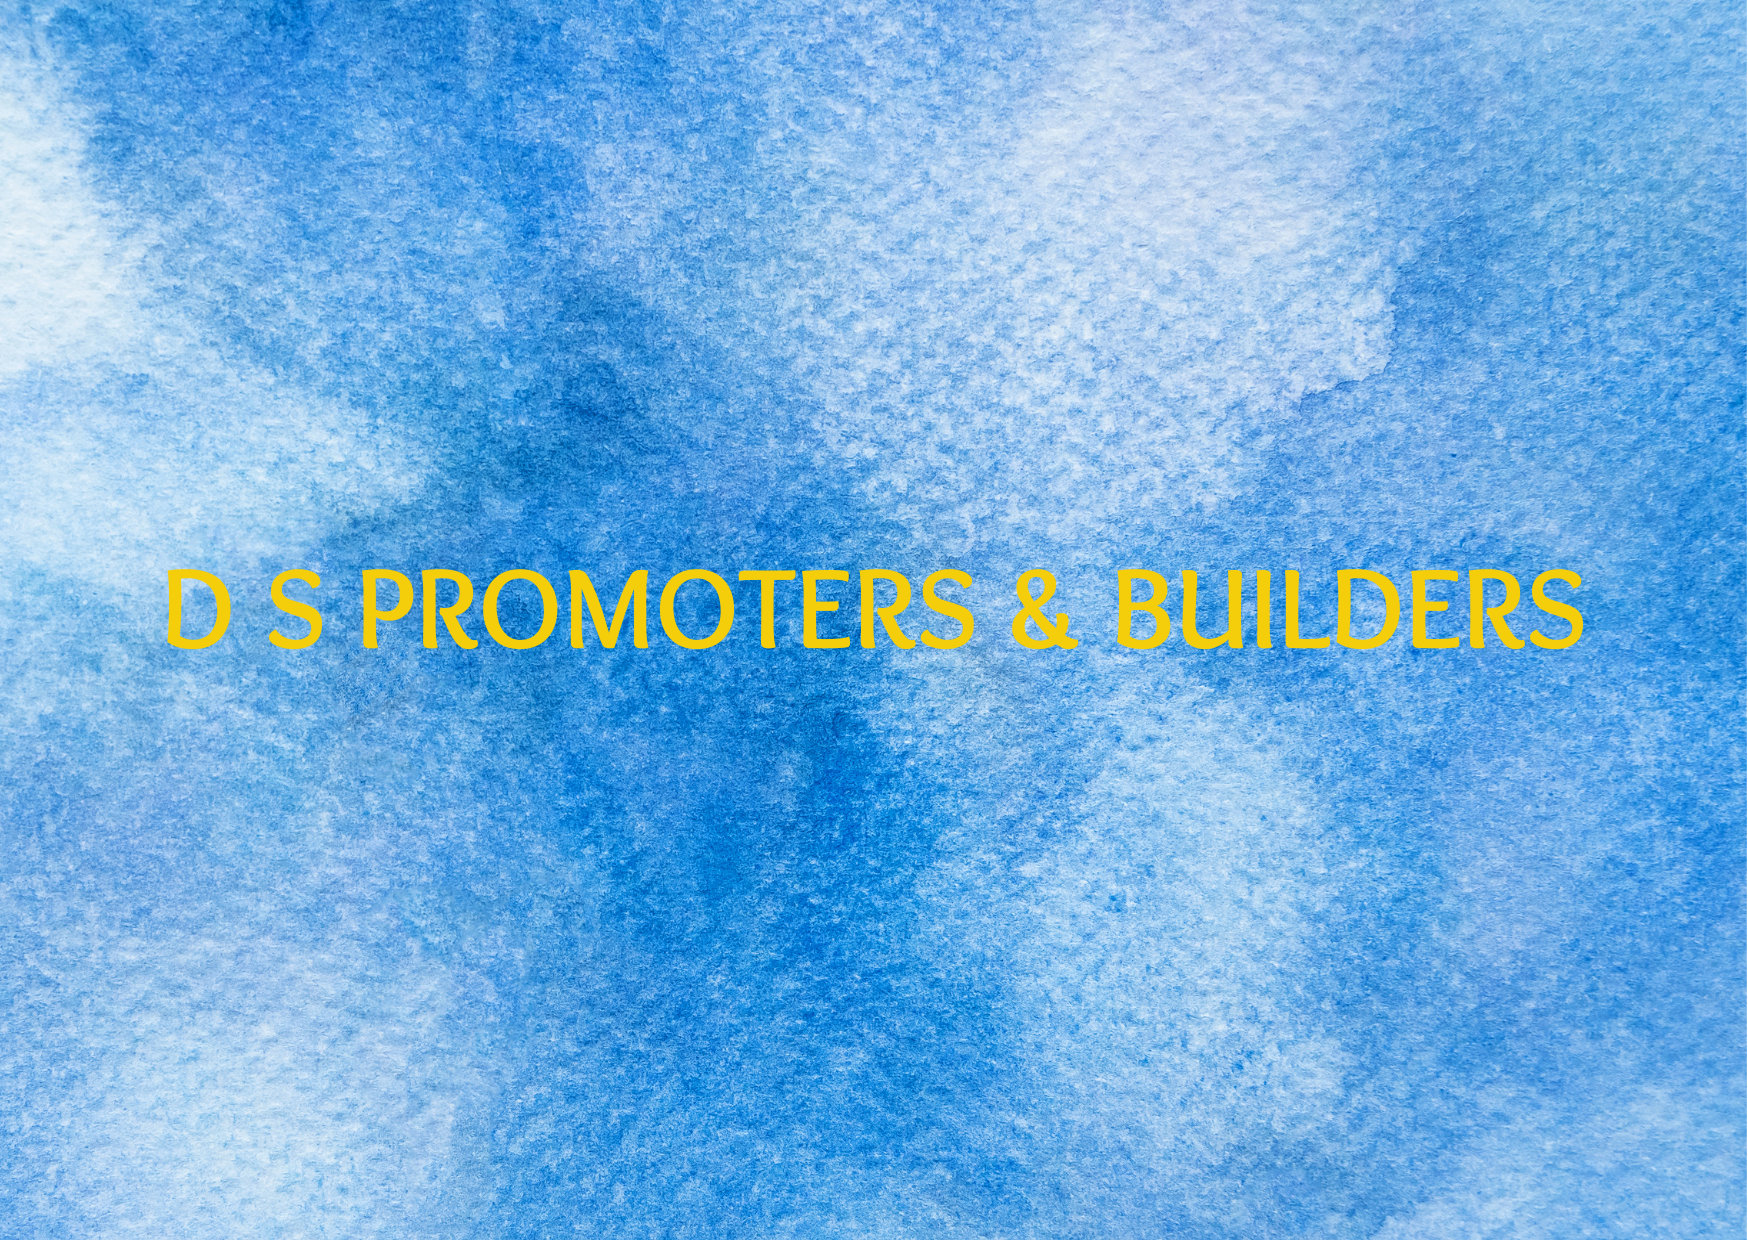 D S Promoters & Builders